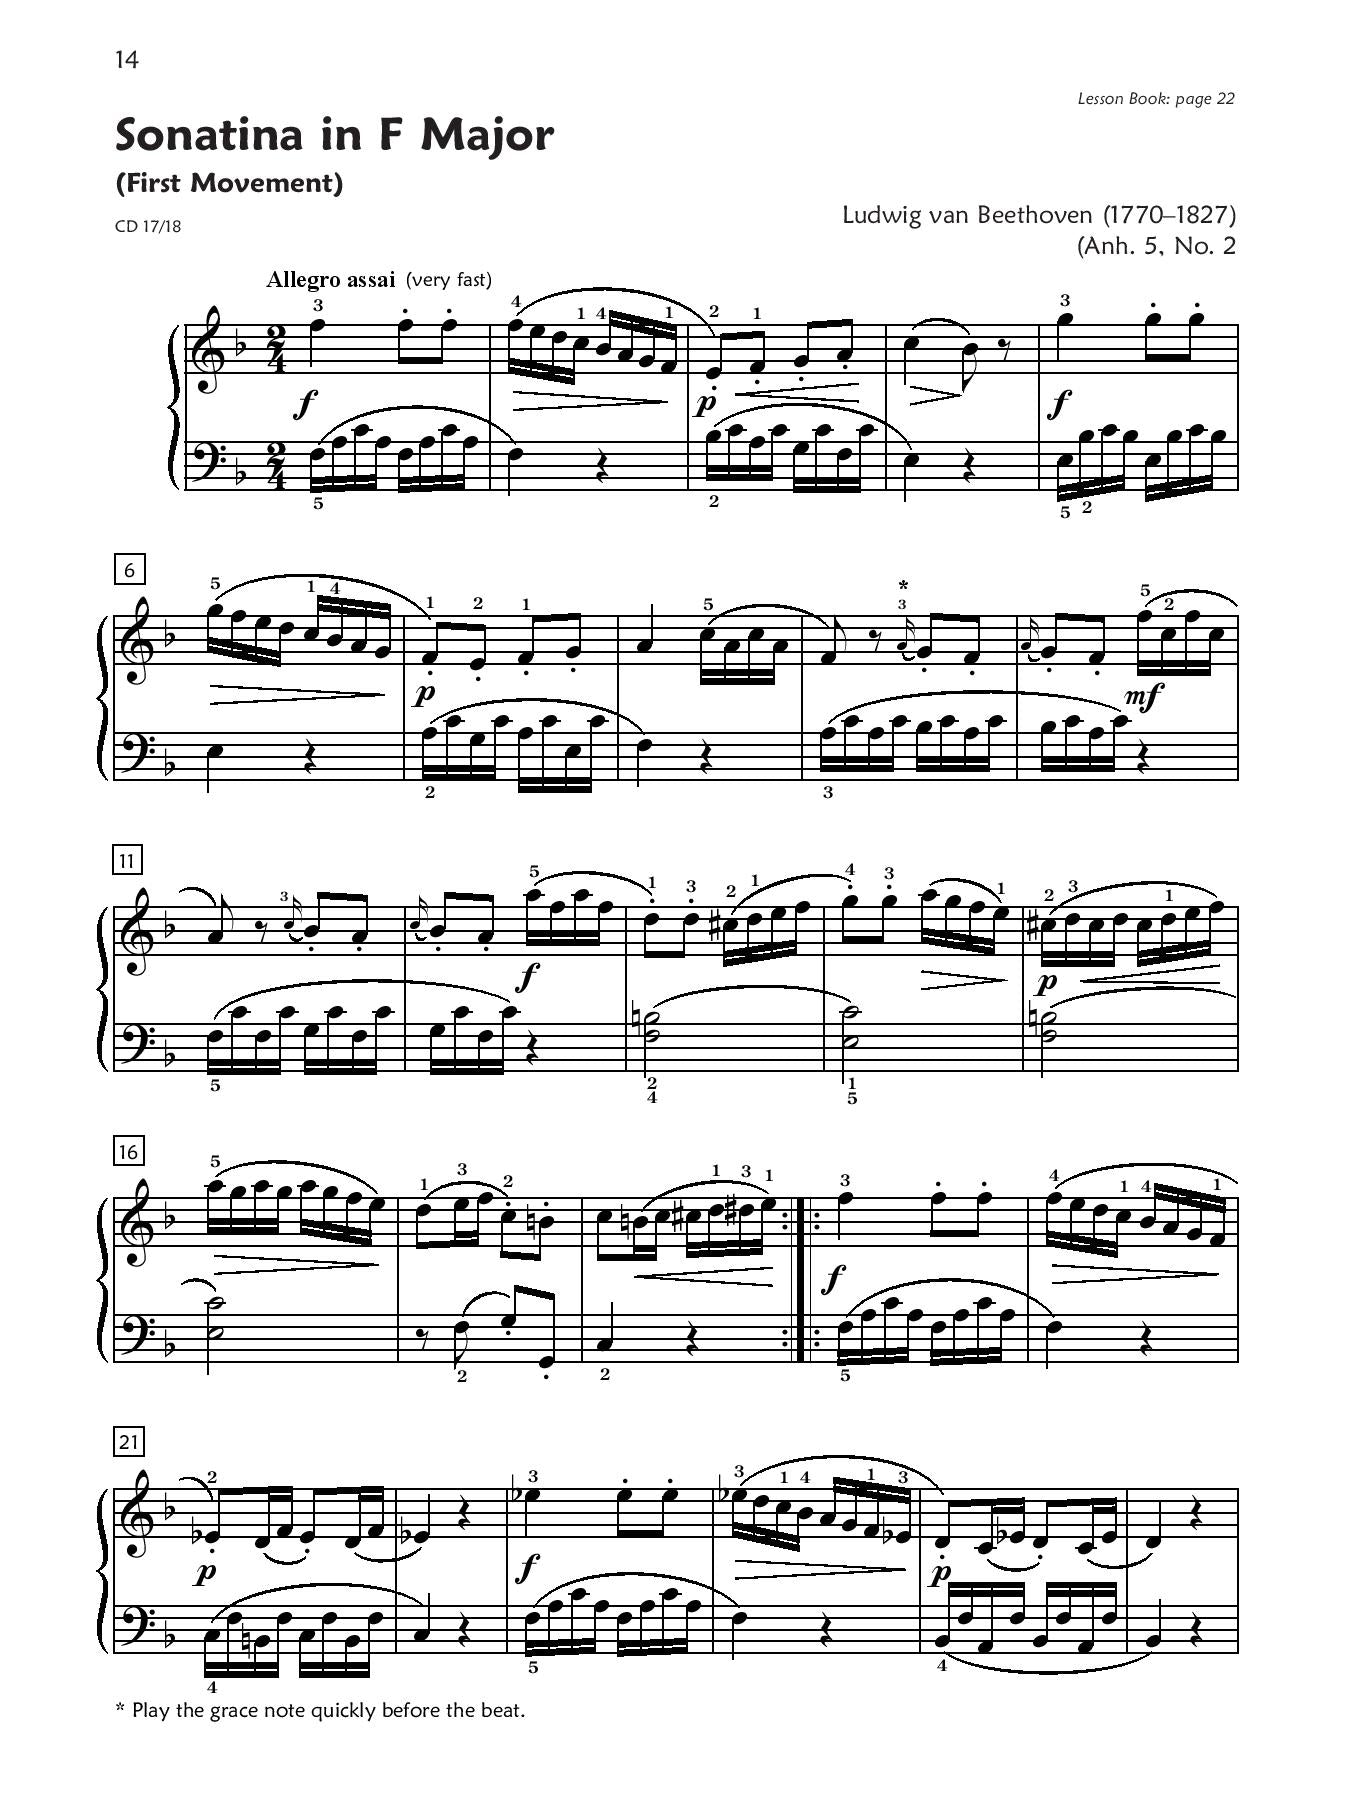 Alfred's Premier Piano Course, Masterworks 6